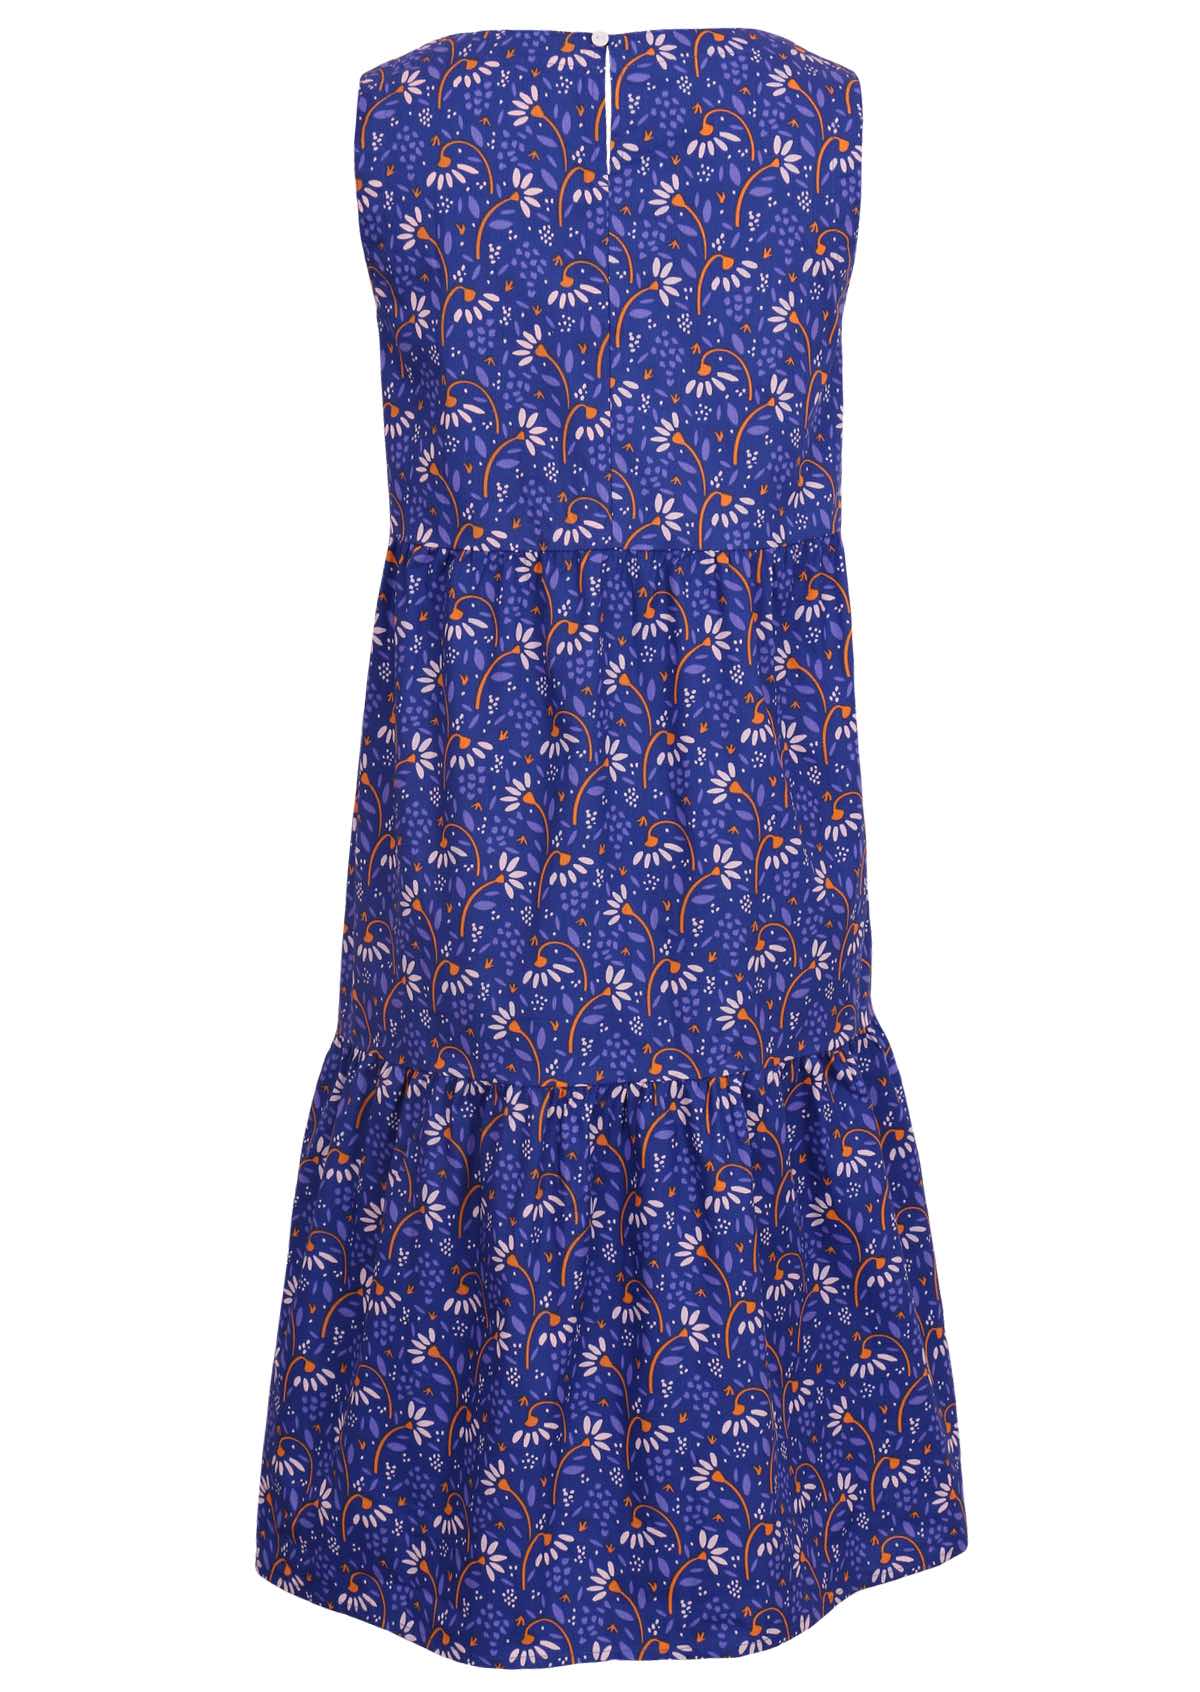 fun daisy print on blue base cotton midi length cotton dress